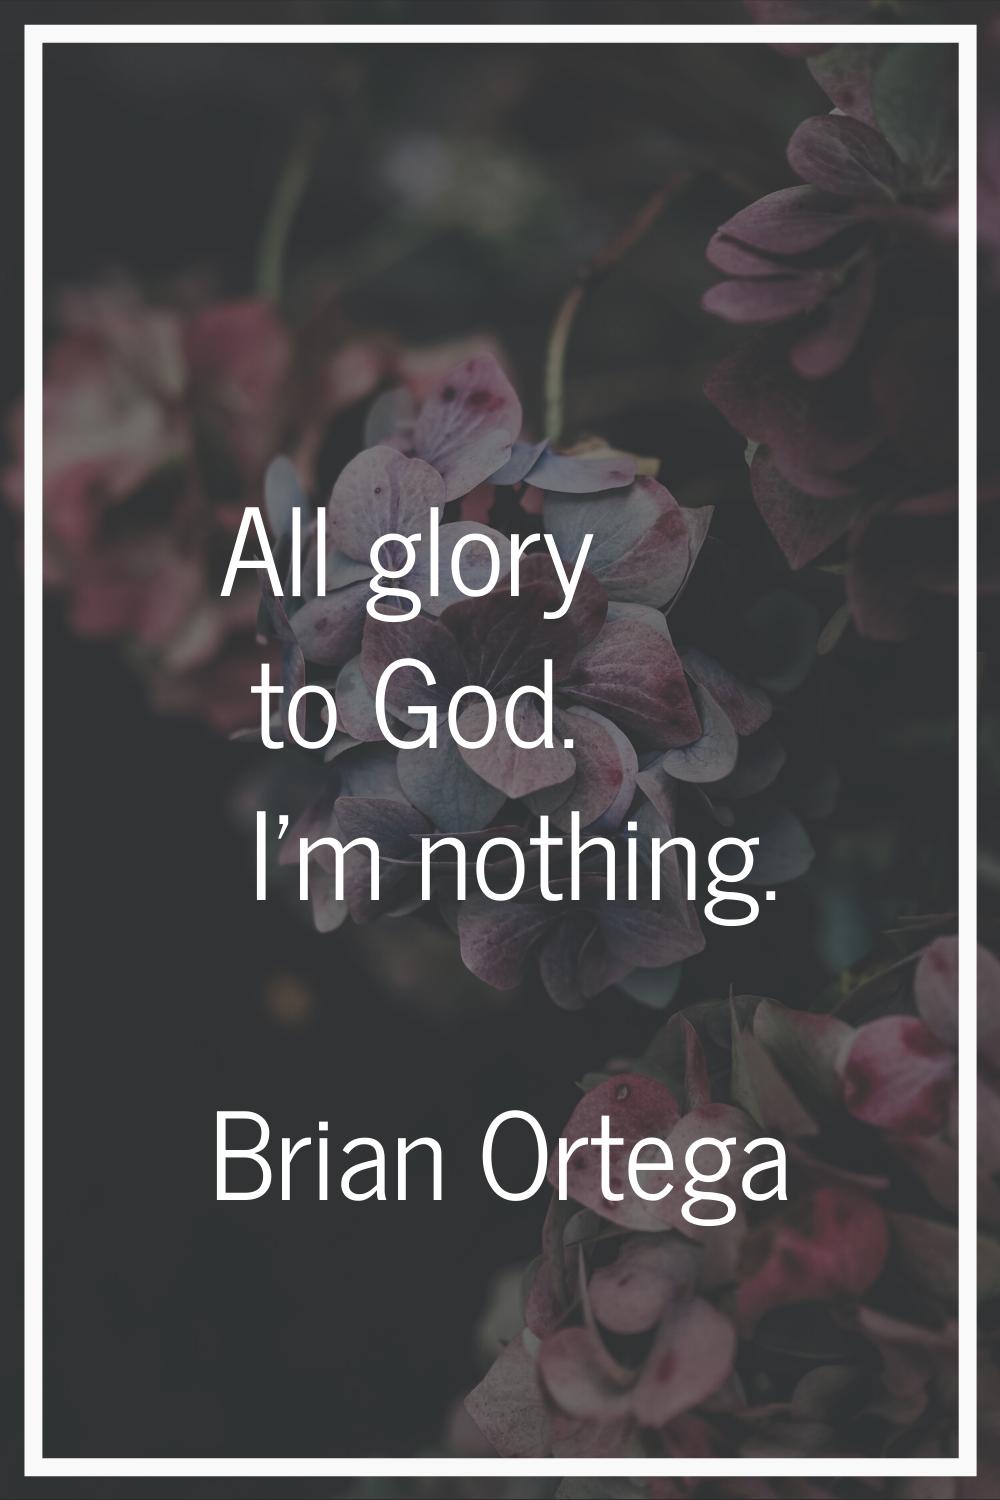 All glory to God. I'm nothing.